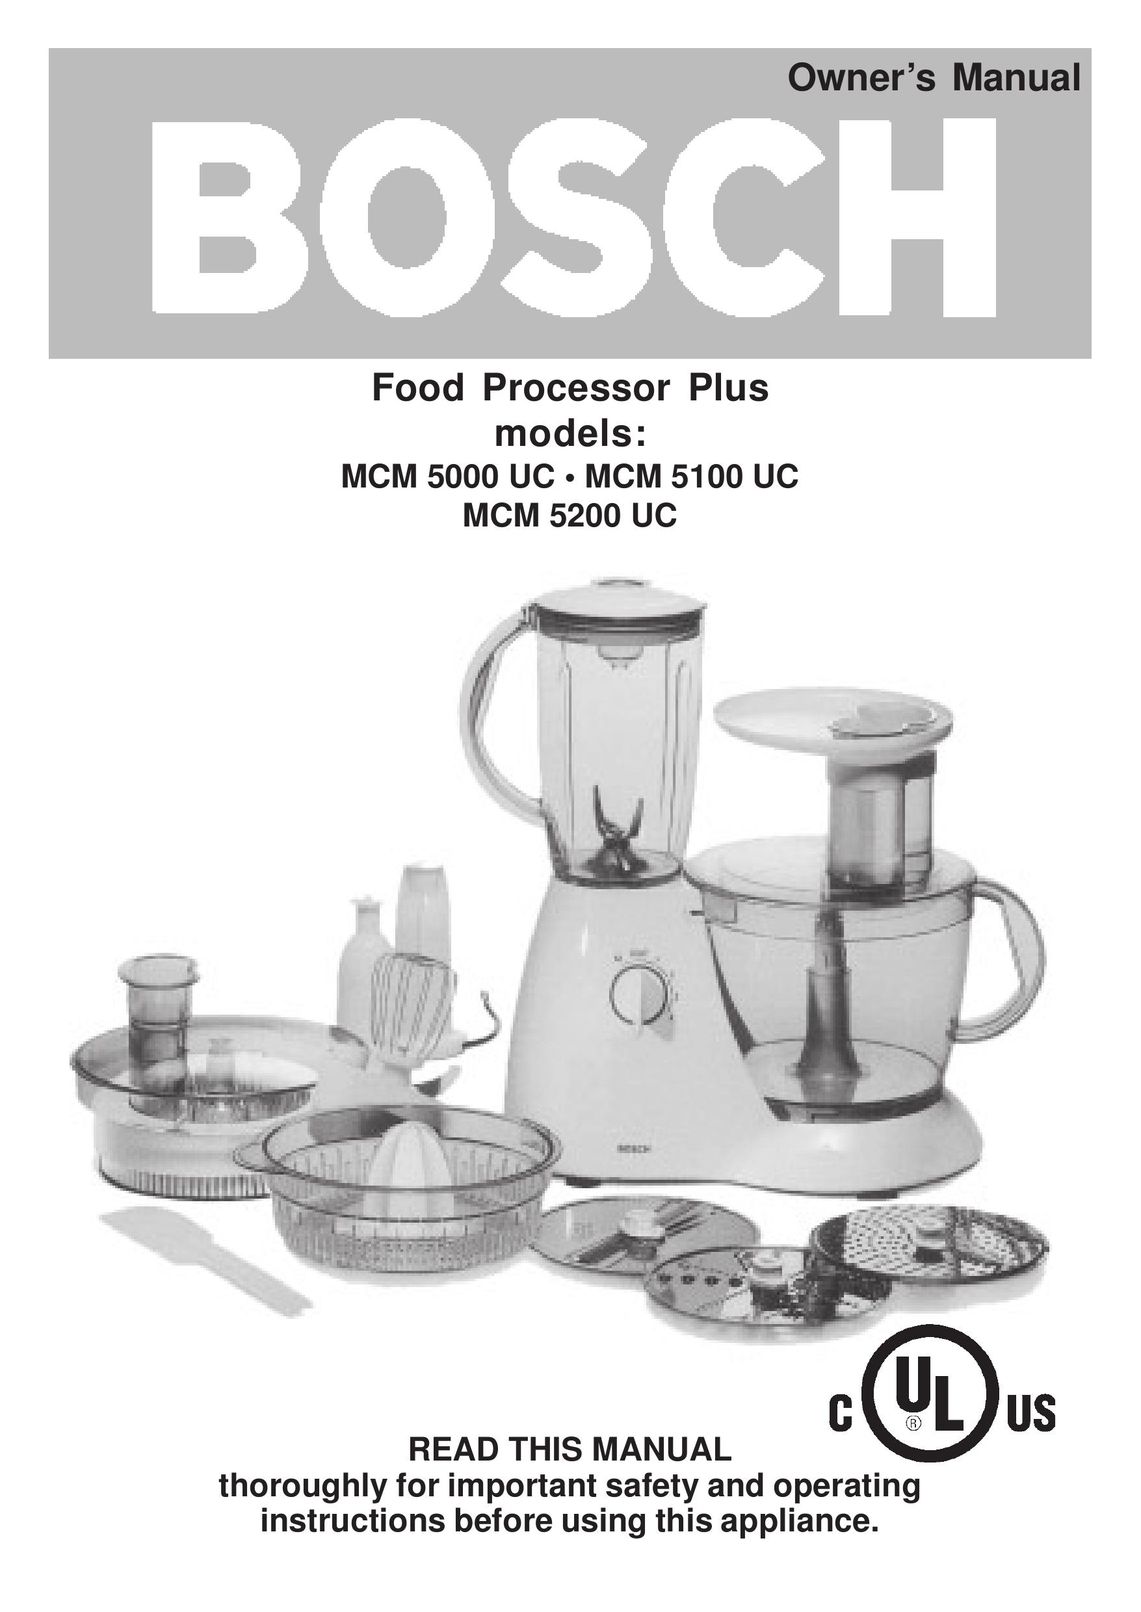 Bosch Appliances UC MCM 5200 Blender User Manual